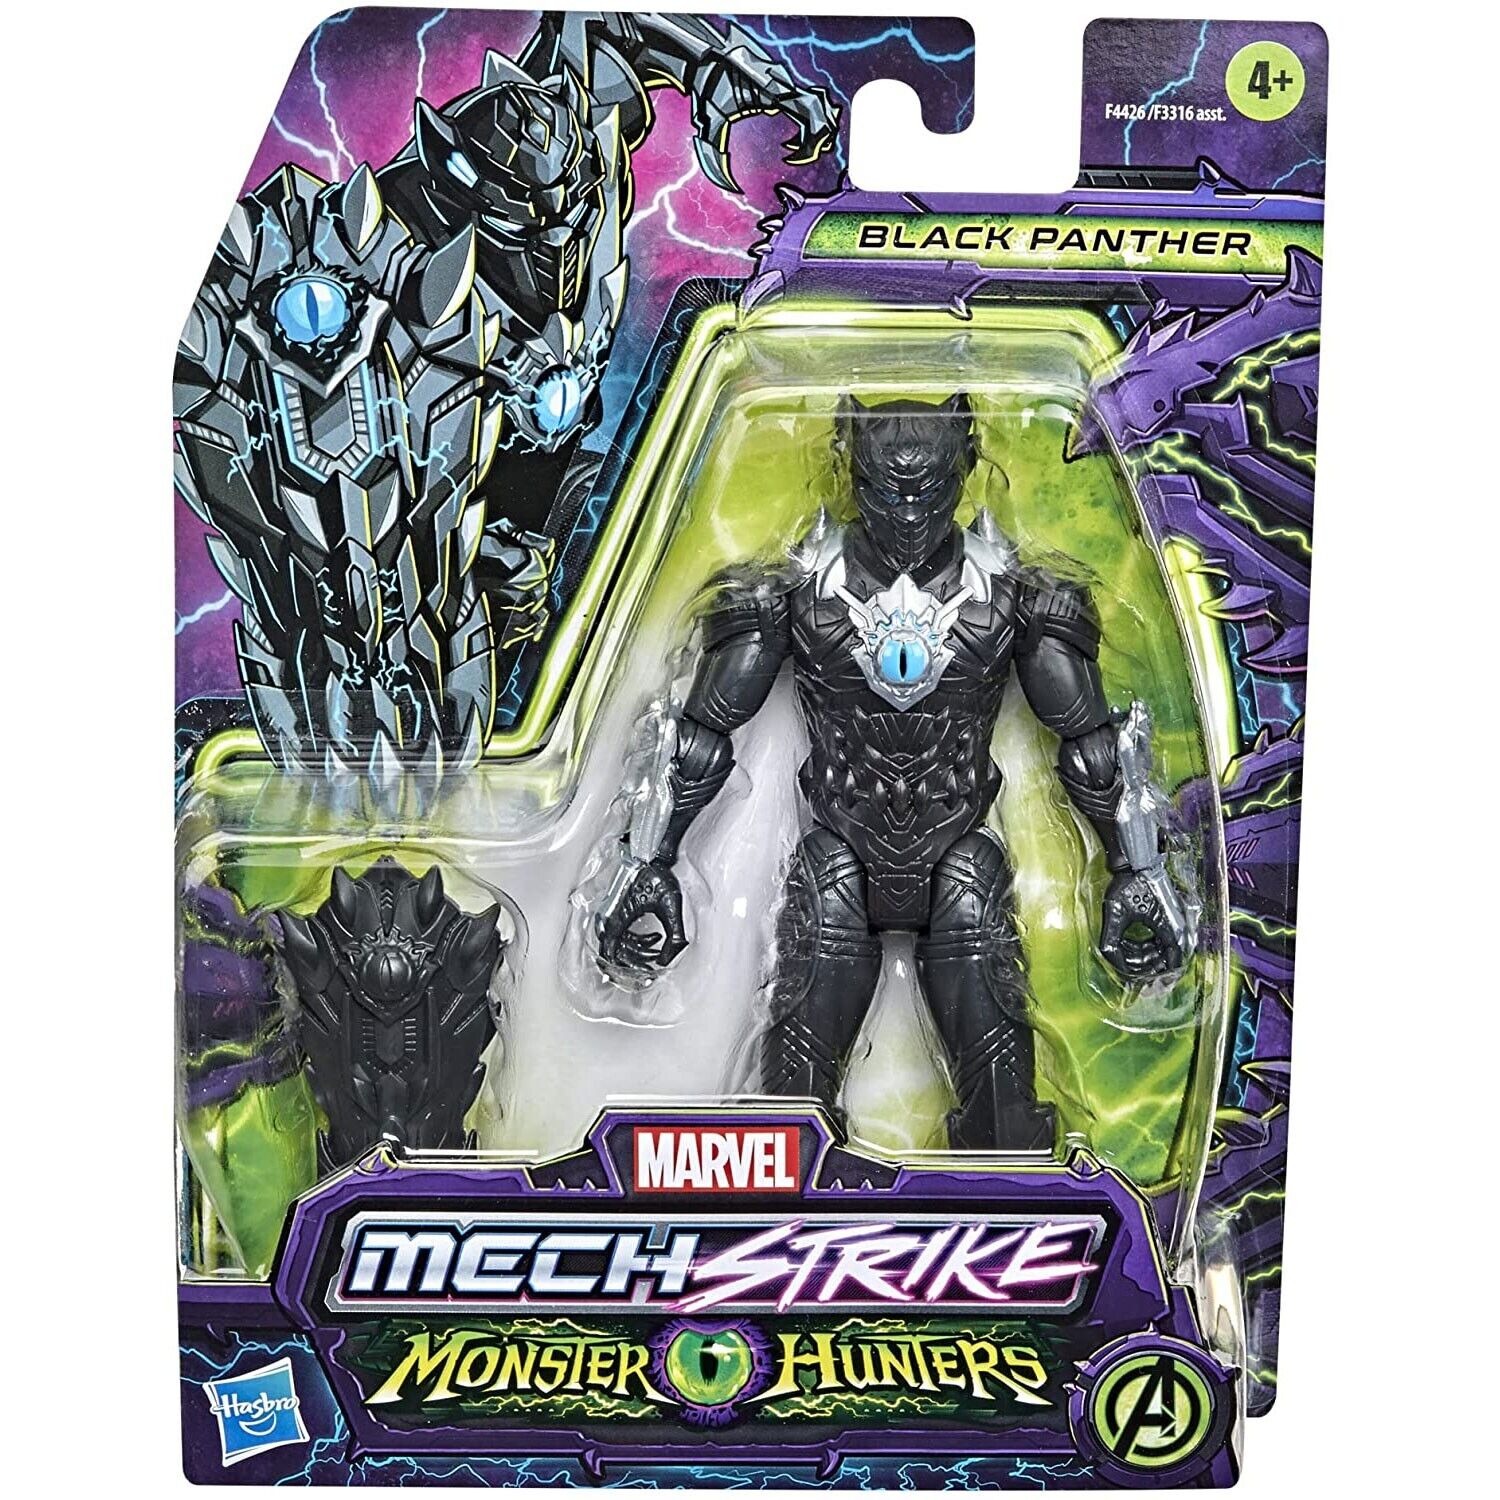 "Marvel Avengers Mech Strike Black Panther 6" Action Figure - Monster Hunters"